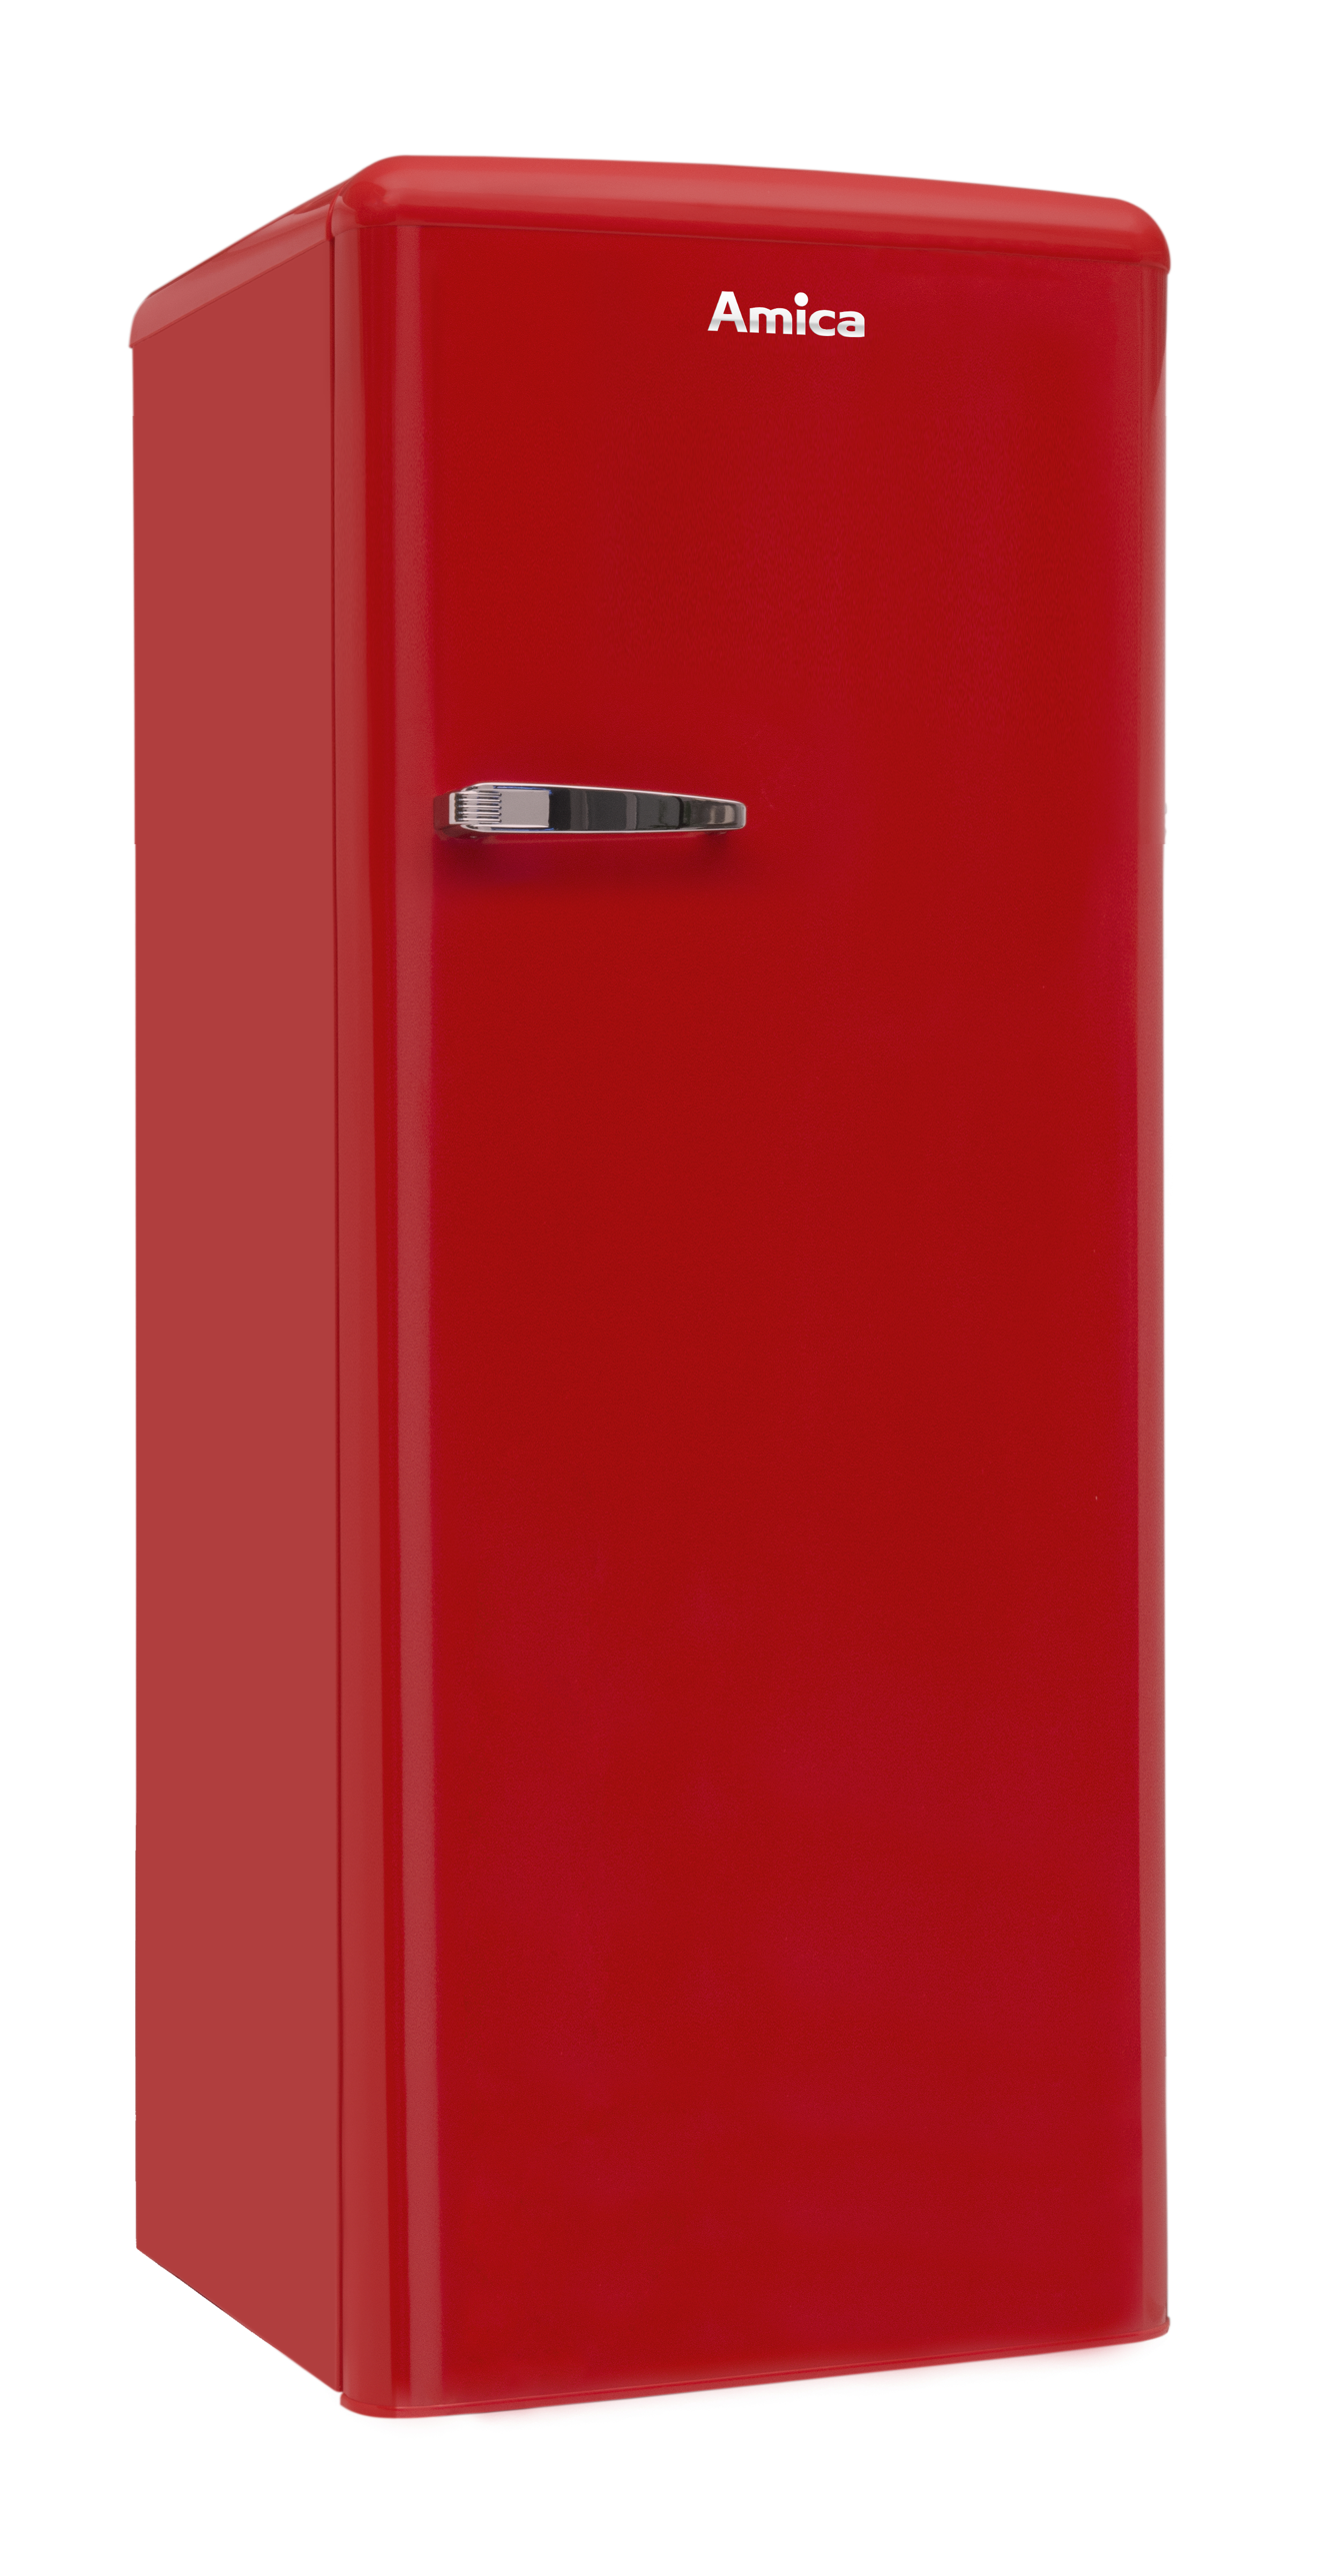 AMICA KSR 364 150 R Chili 1440 mm Kühlschrank Red) (E, Edition Retro hoch